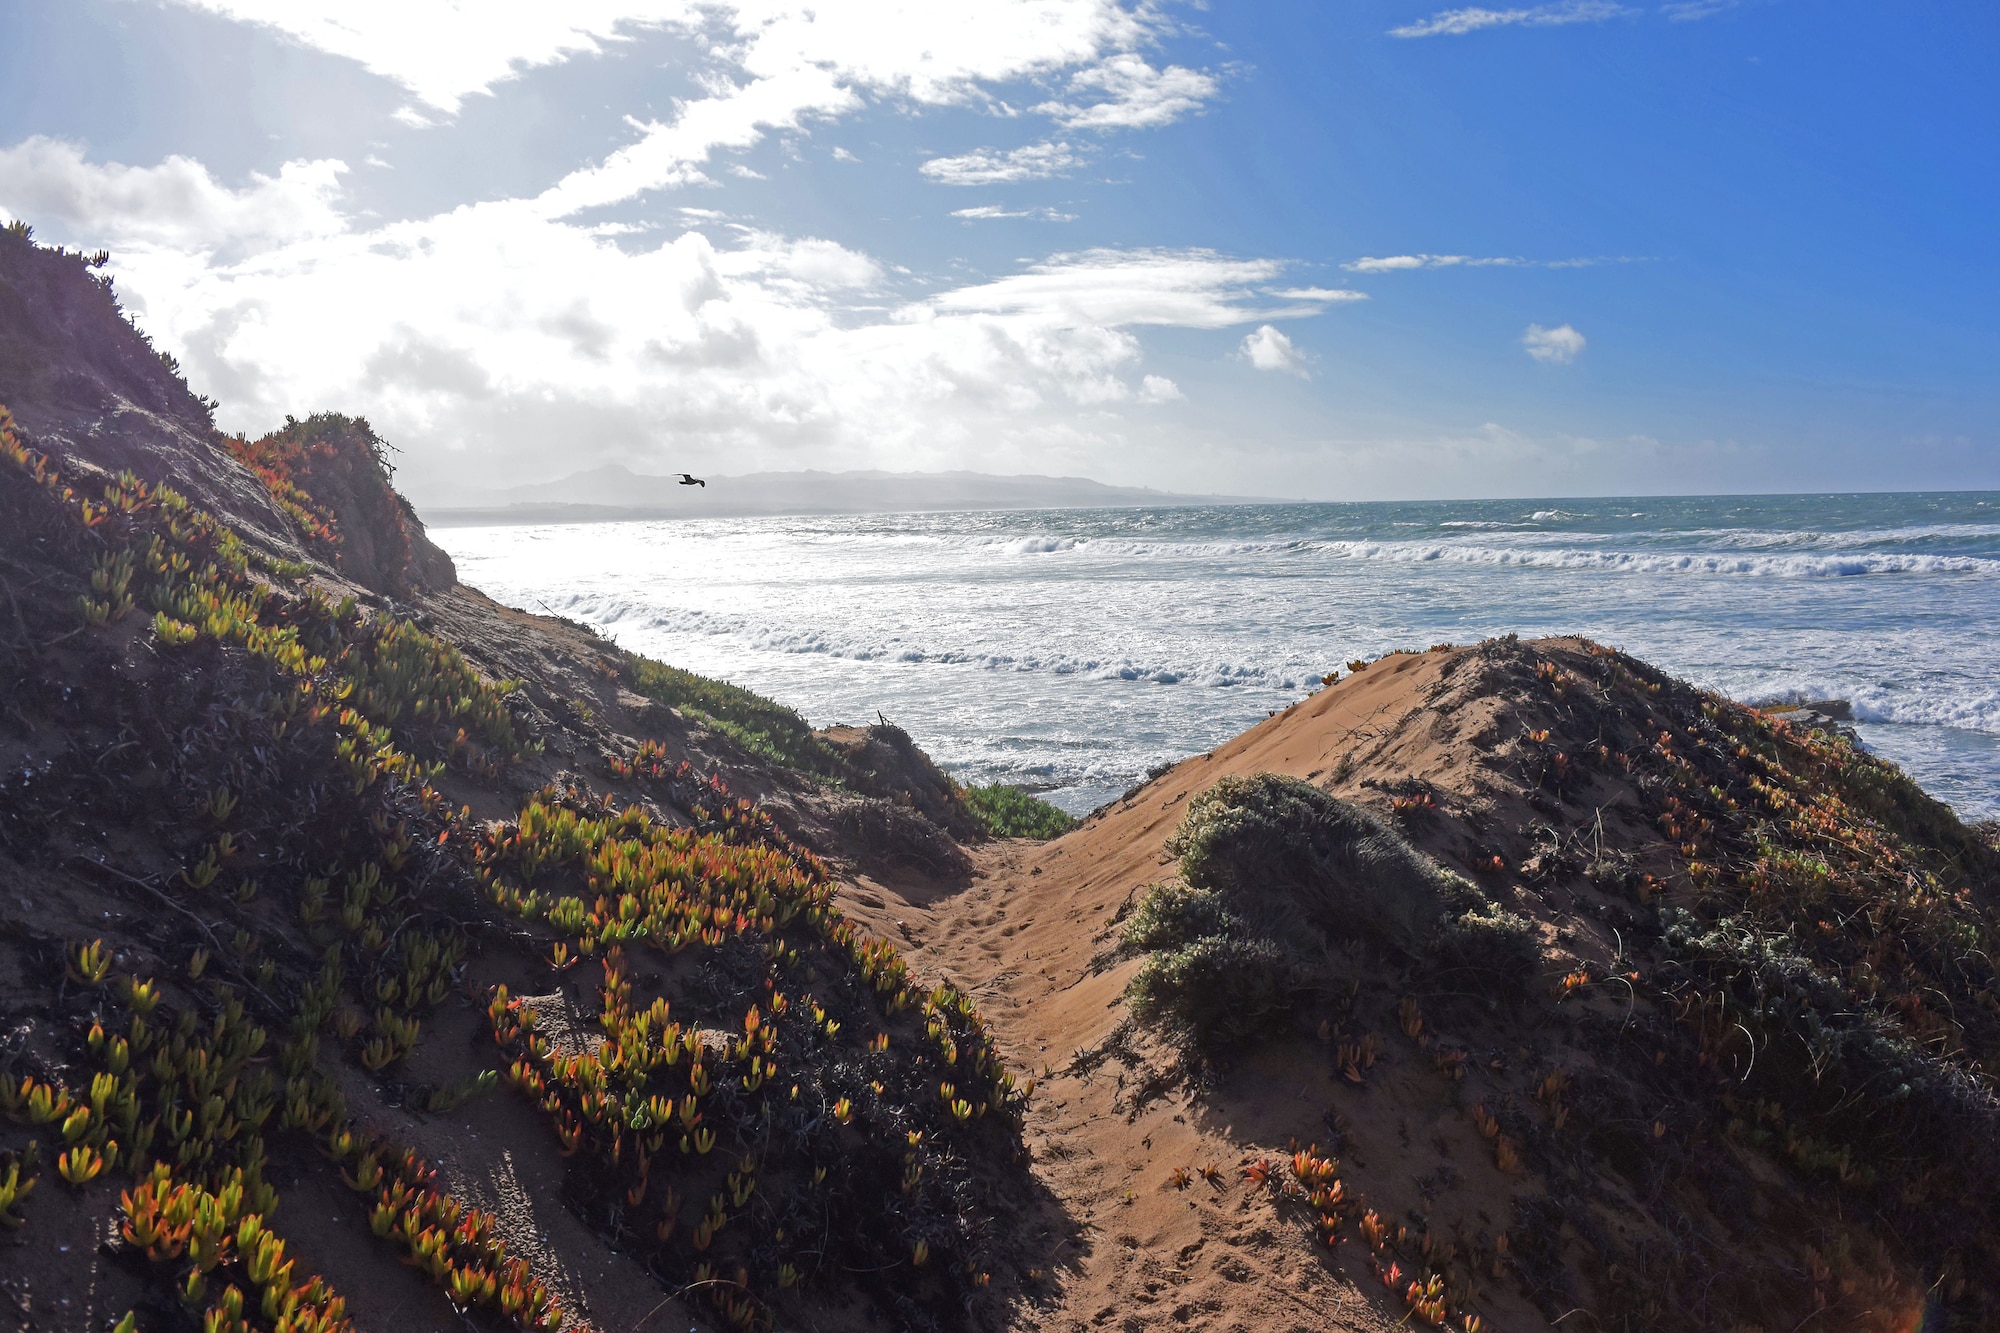 Reddish brown sand dunes carve across the bottom half of frame and lead toward a beachscape lit under sunny blue sky.